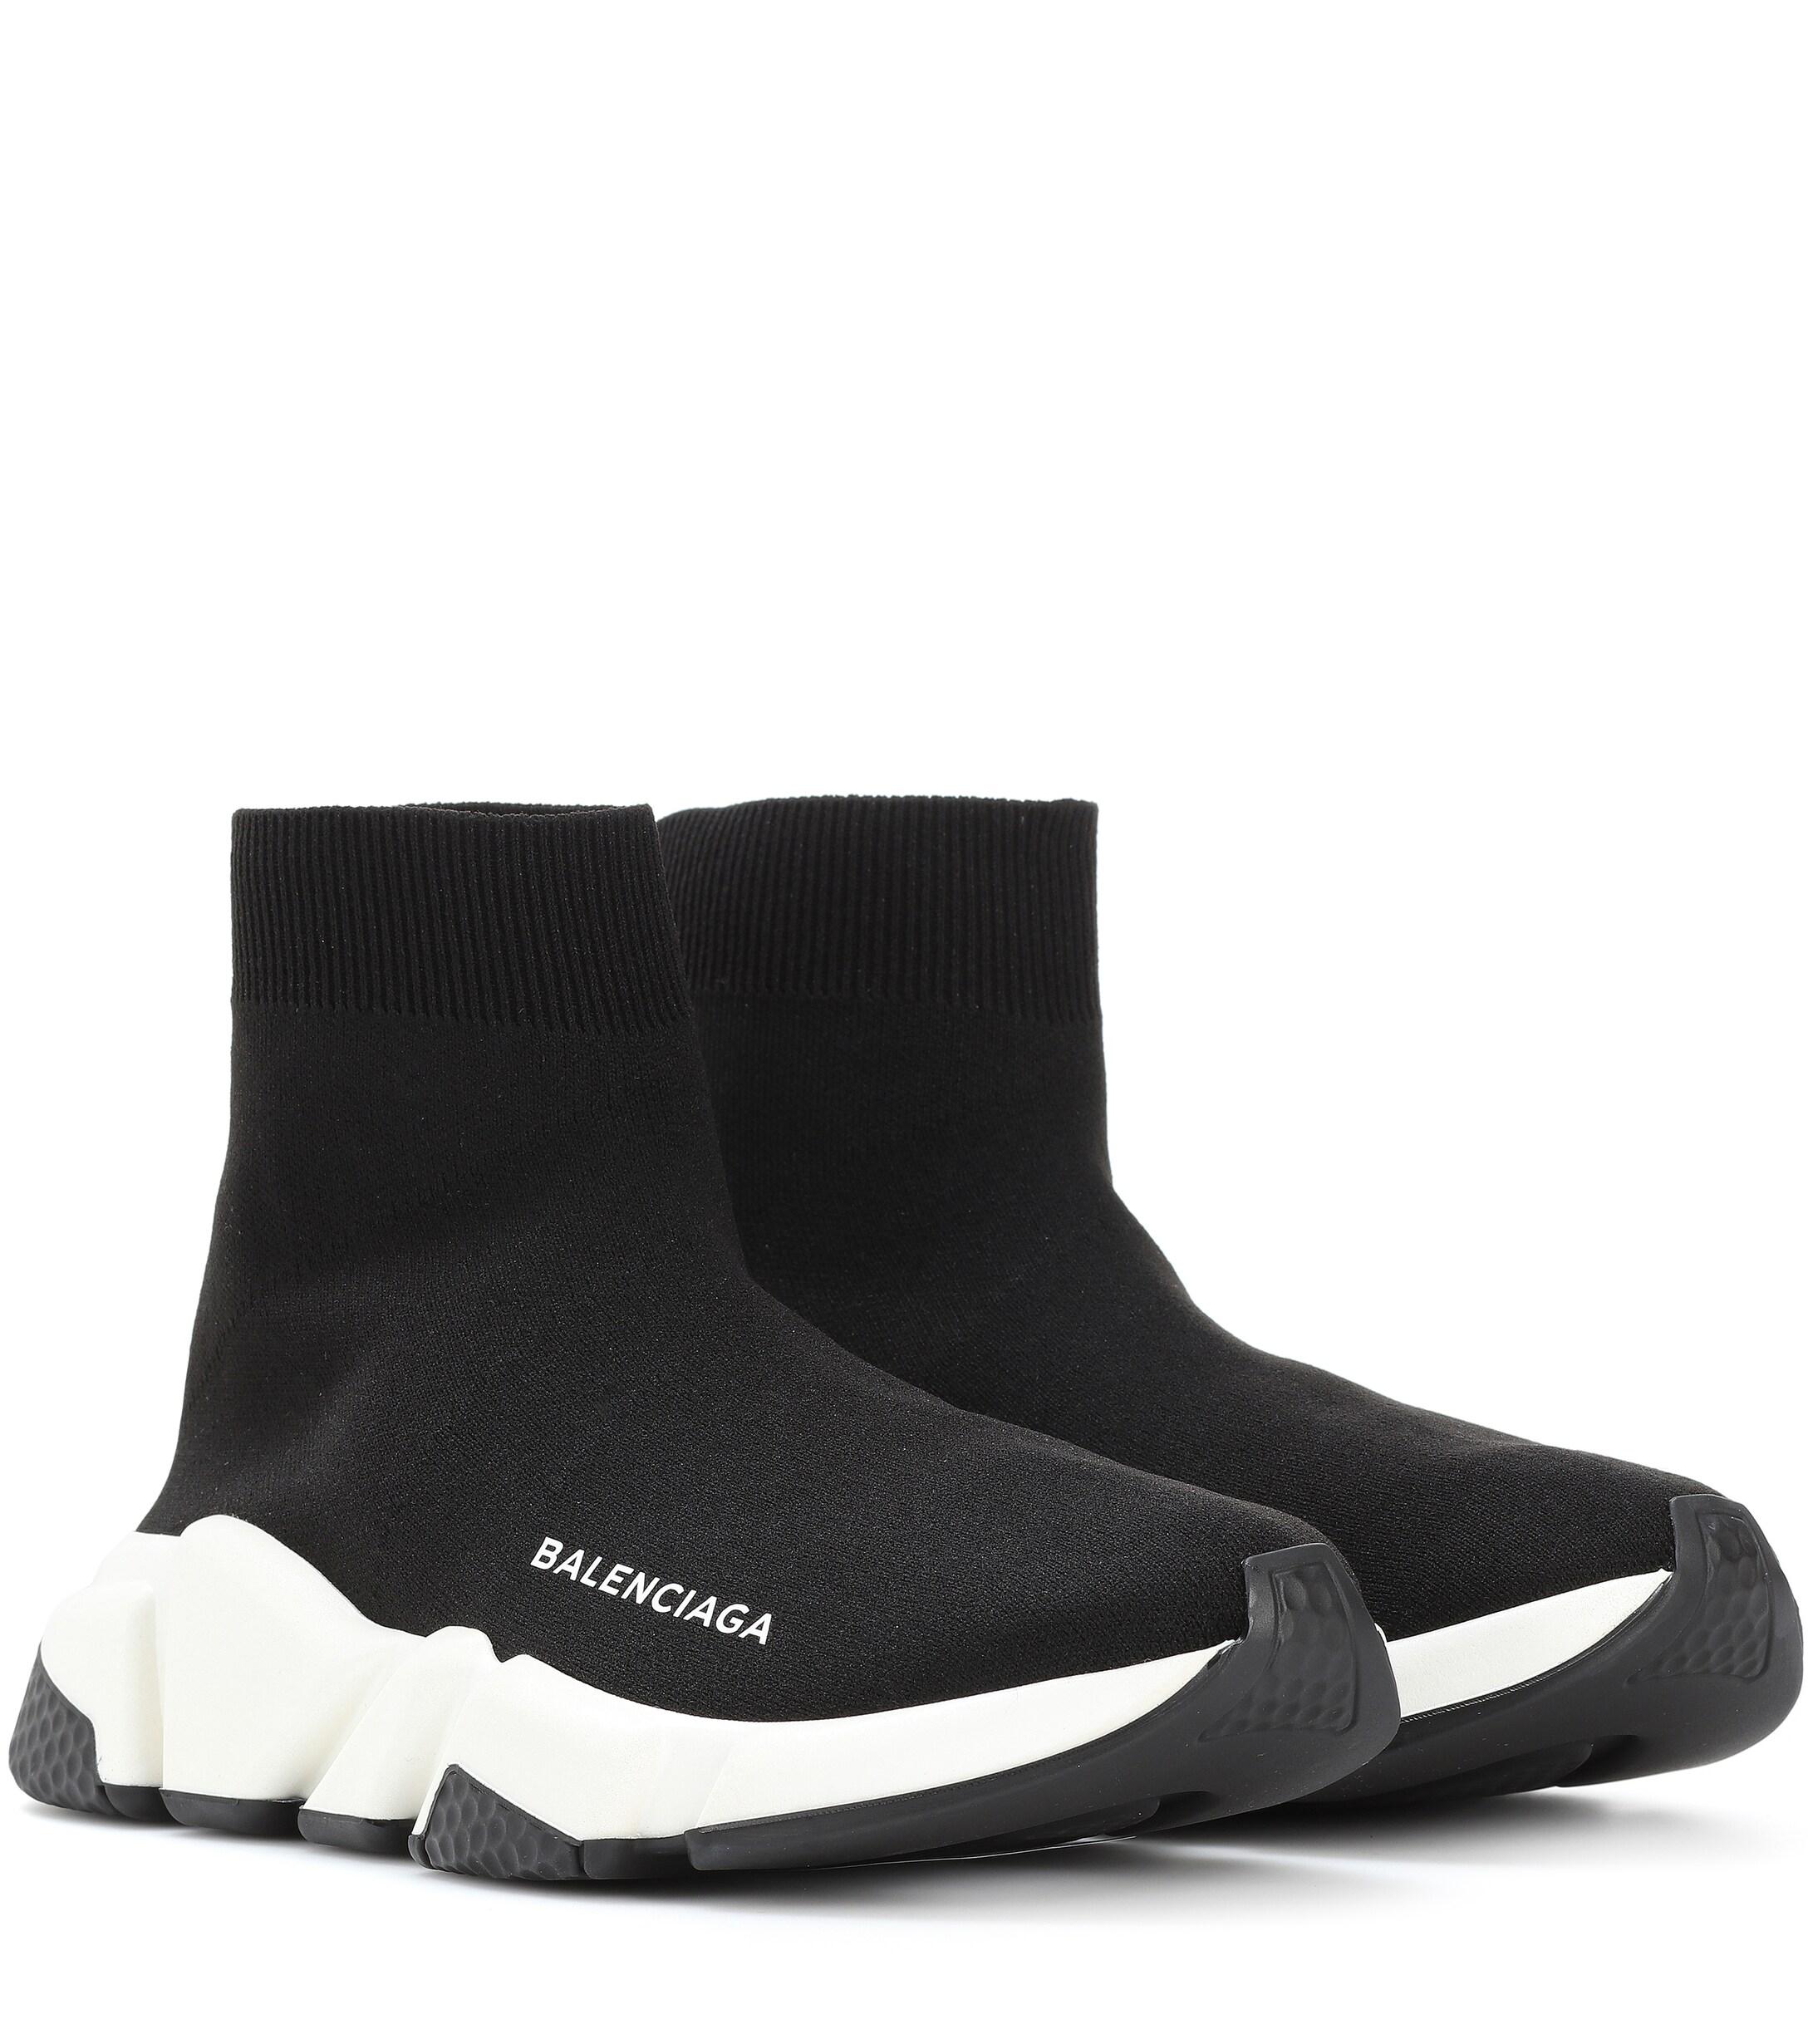 Balenciaga Speed Sneakers in Black - Lyst